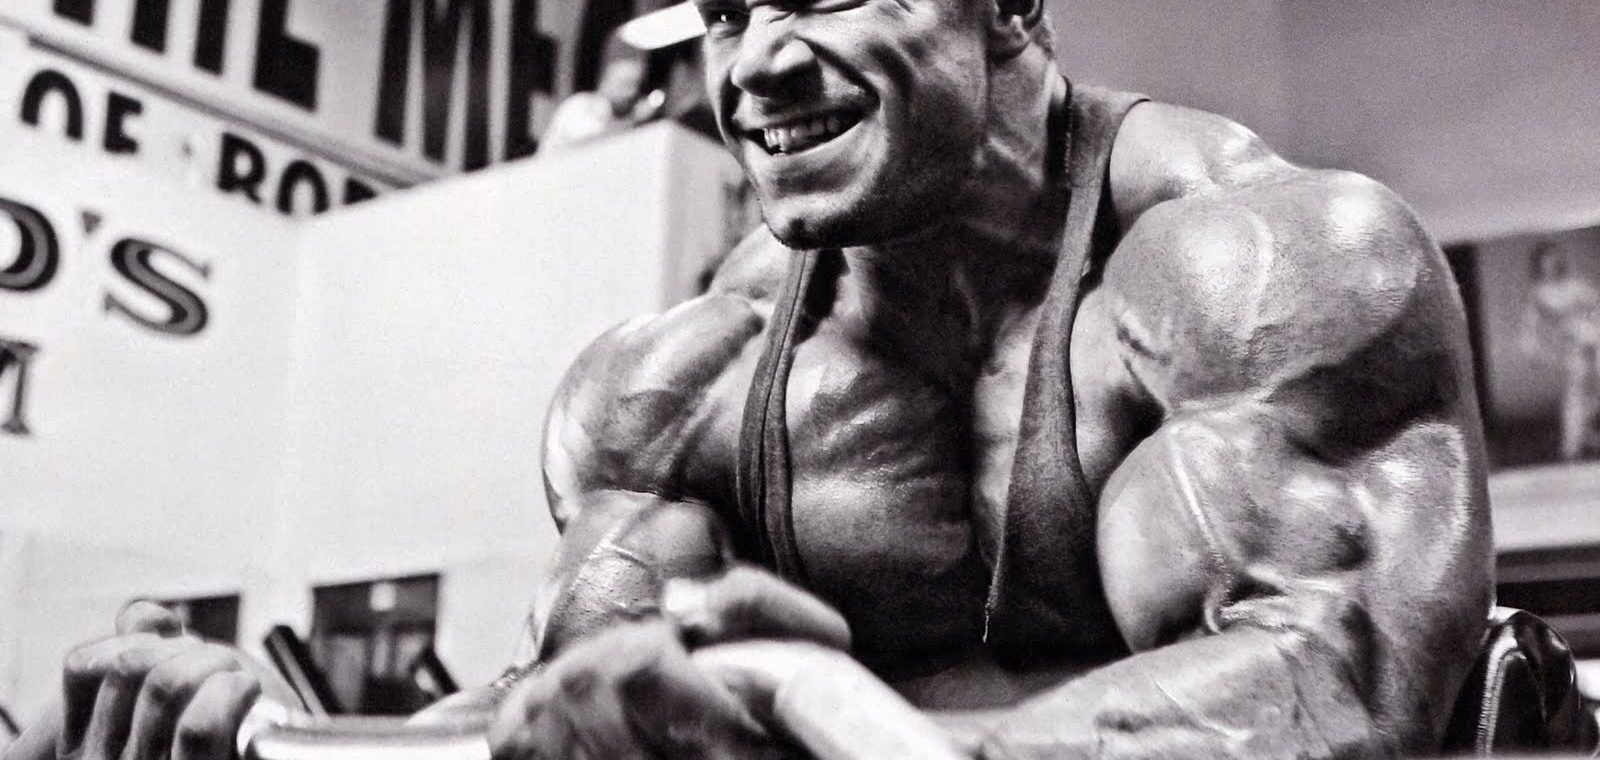 Daily Bodybuilding Motivation: Seth Feroce - Massive ...